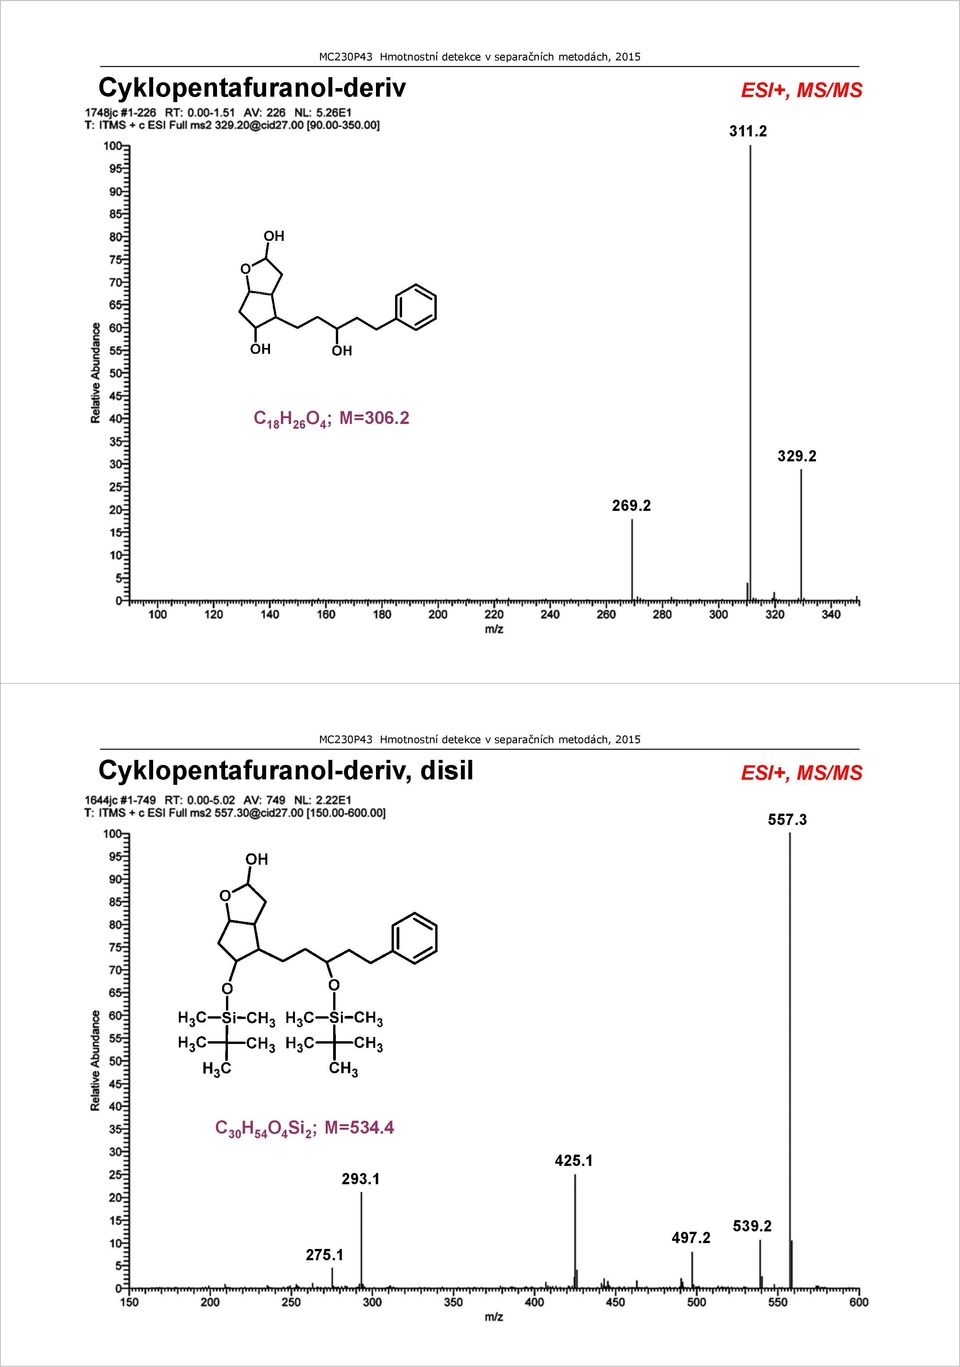 2 Cyklopentafuranol-deriv, disil ESI+, MS/MS